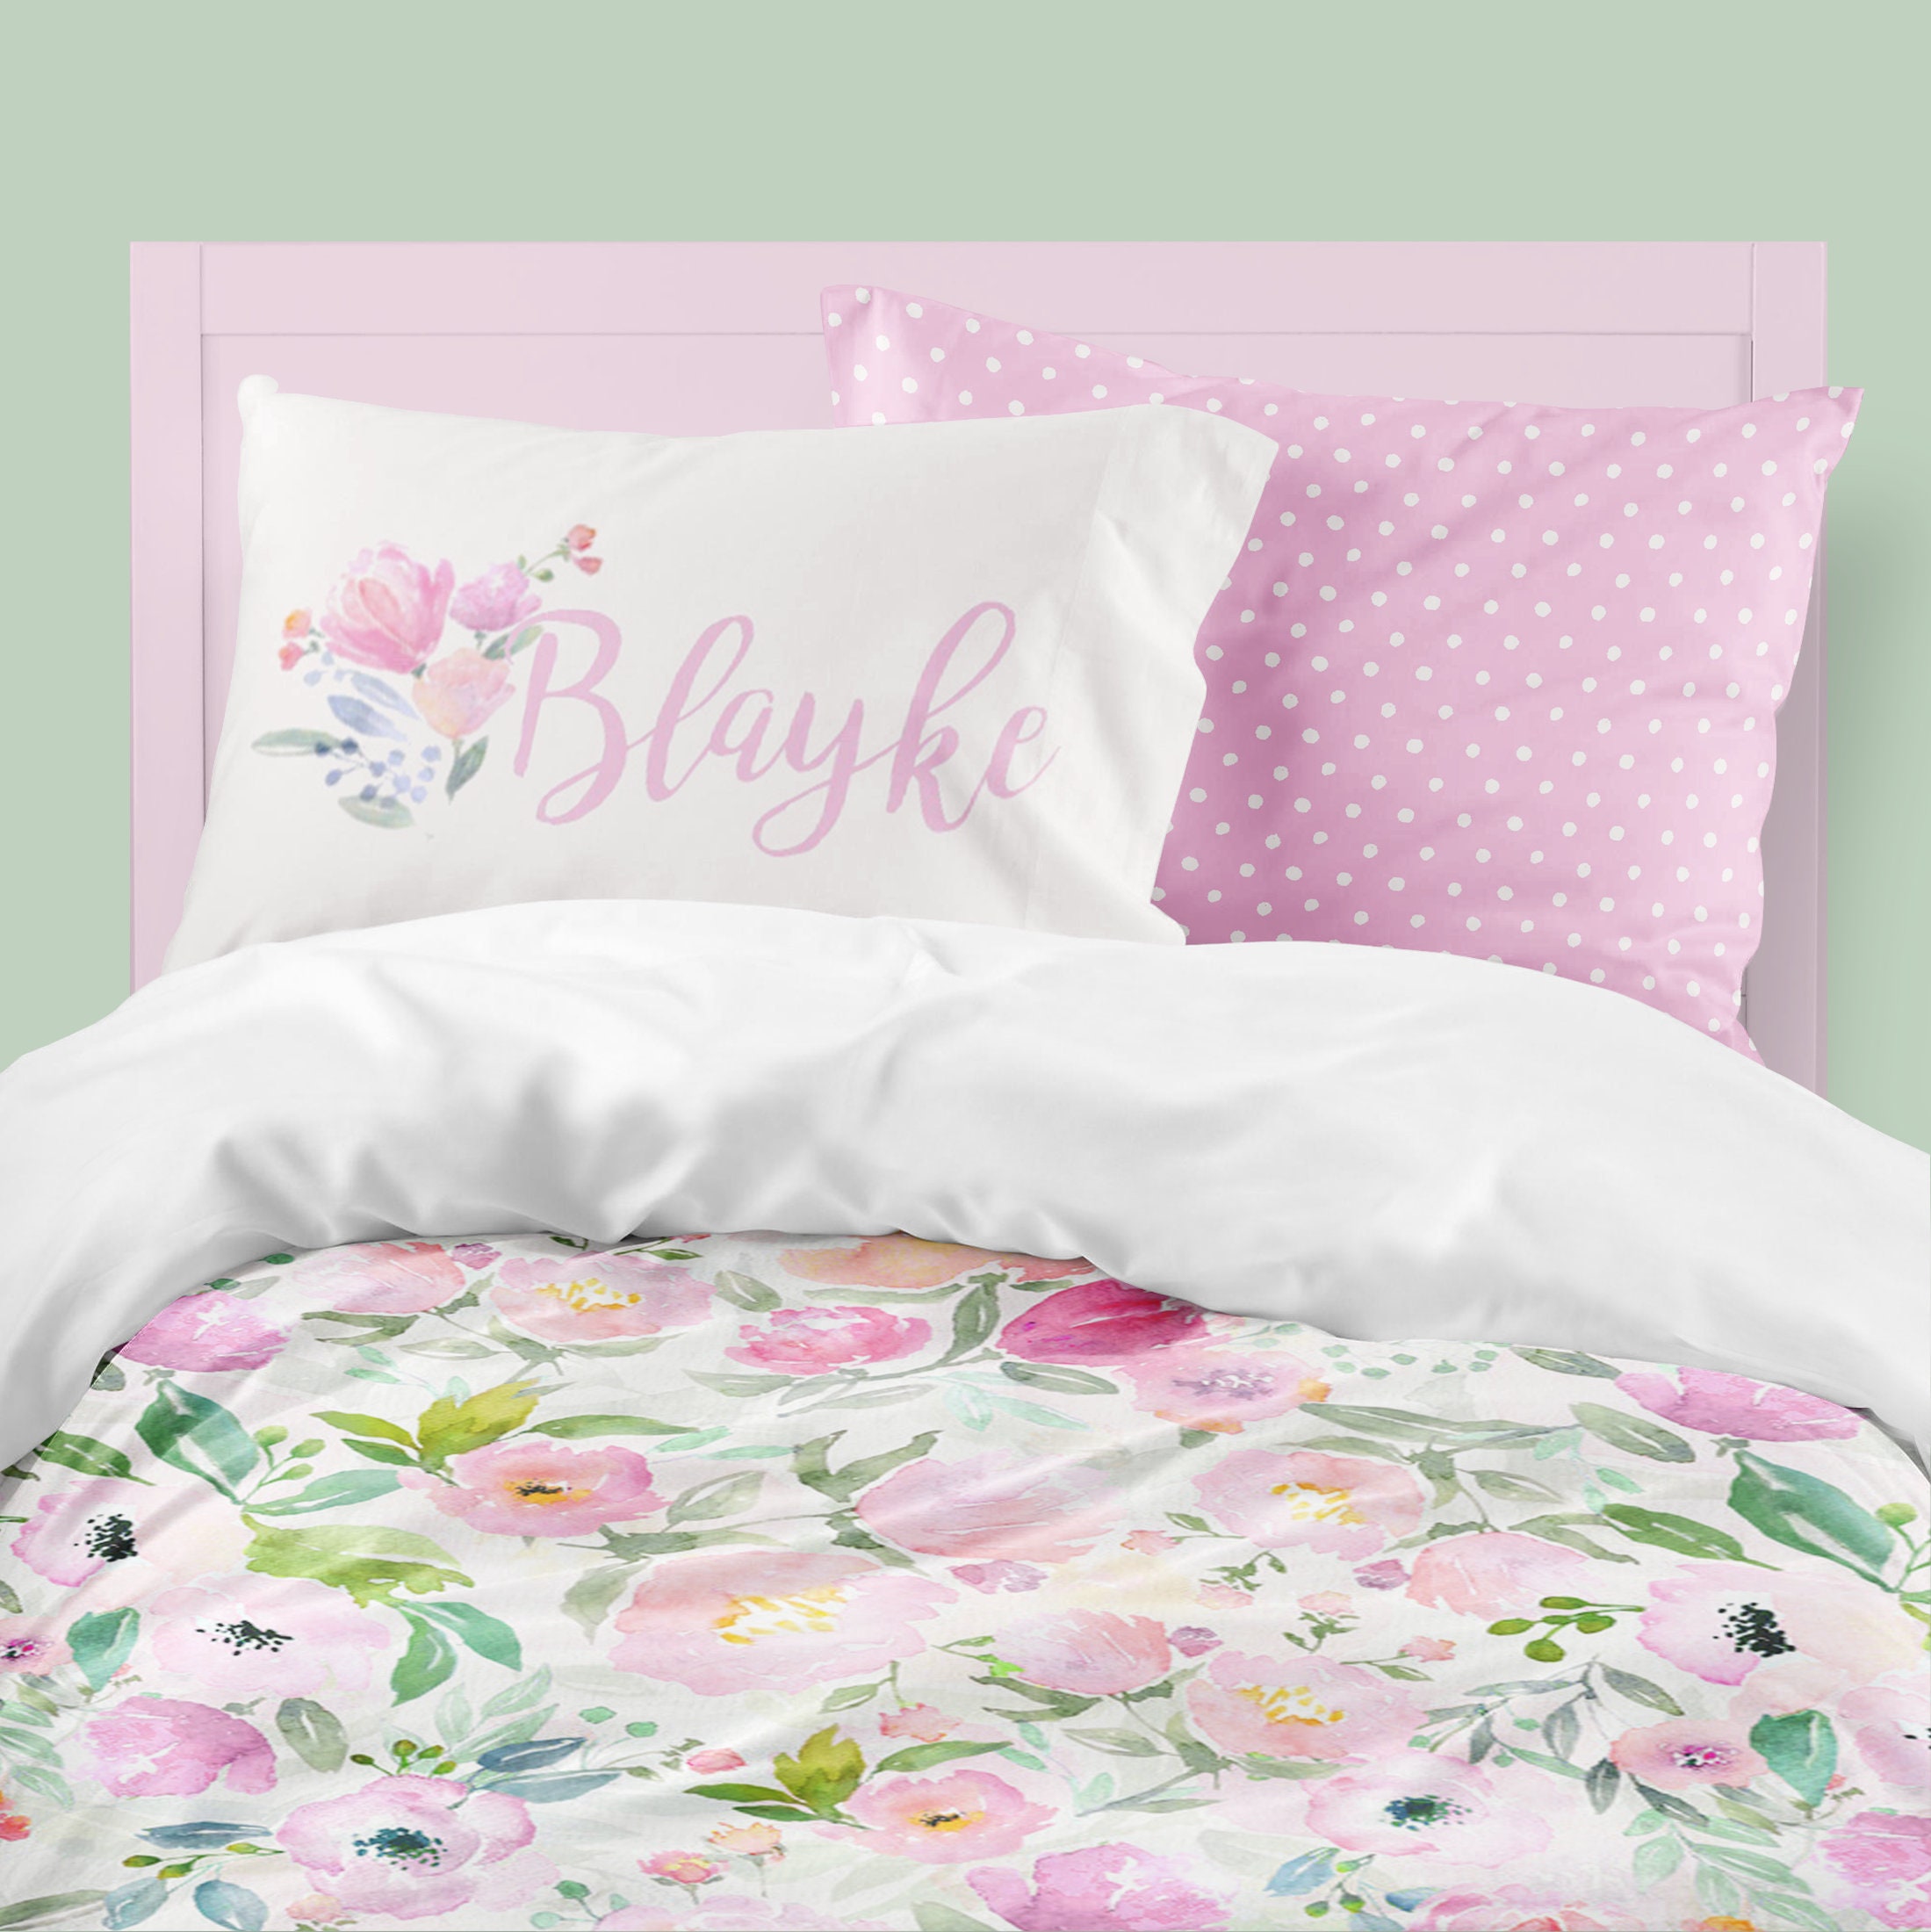 Bedding Floral Girls Room Decor Duvet Cover Comforter Etsy